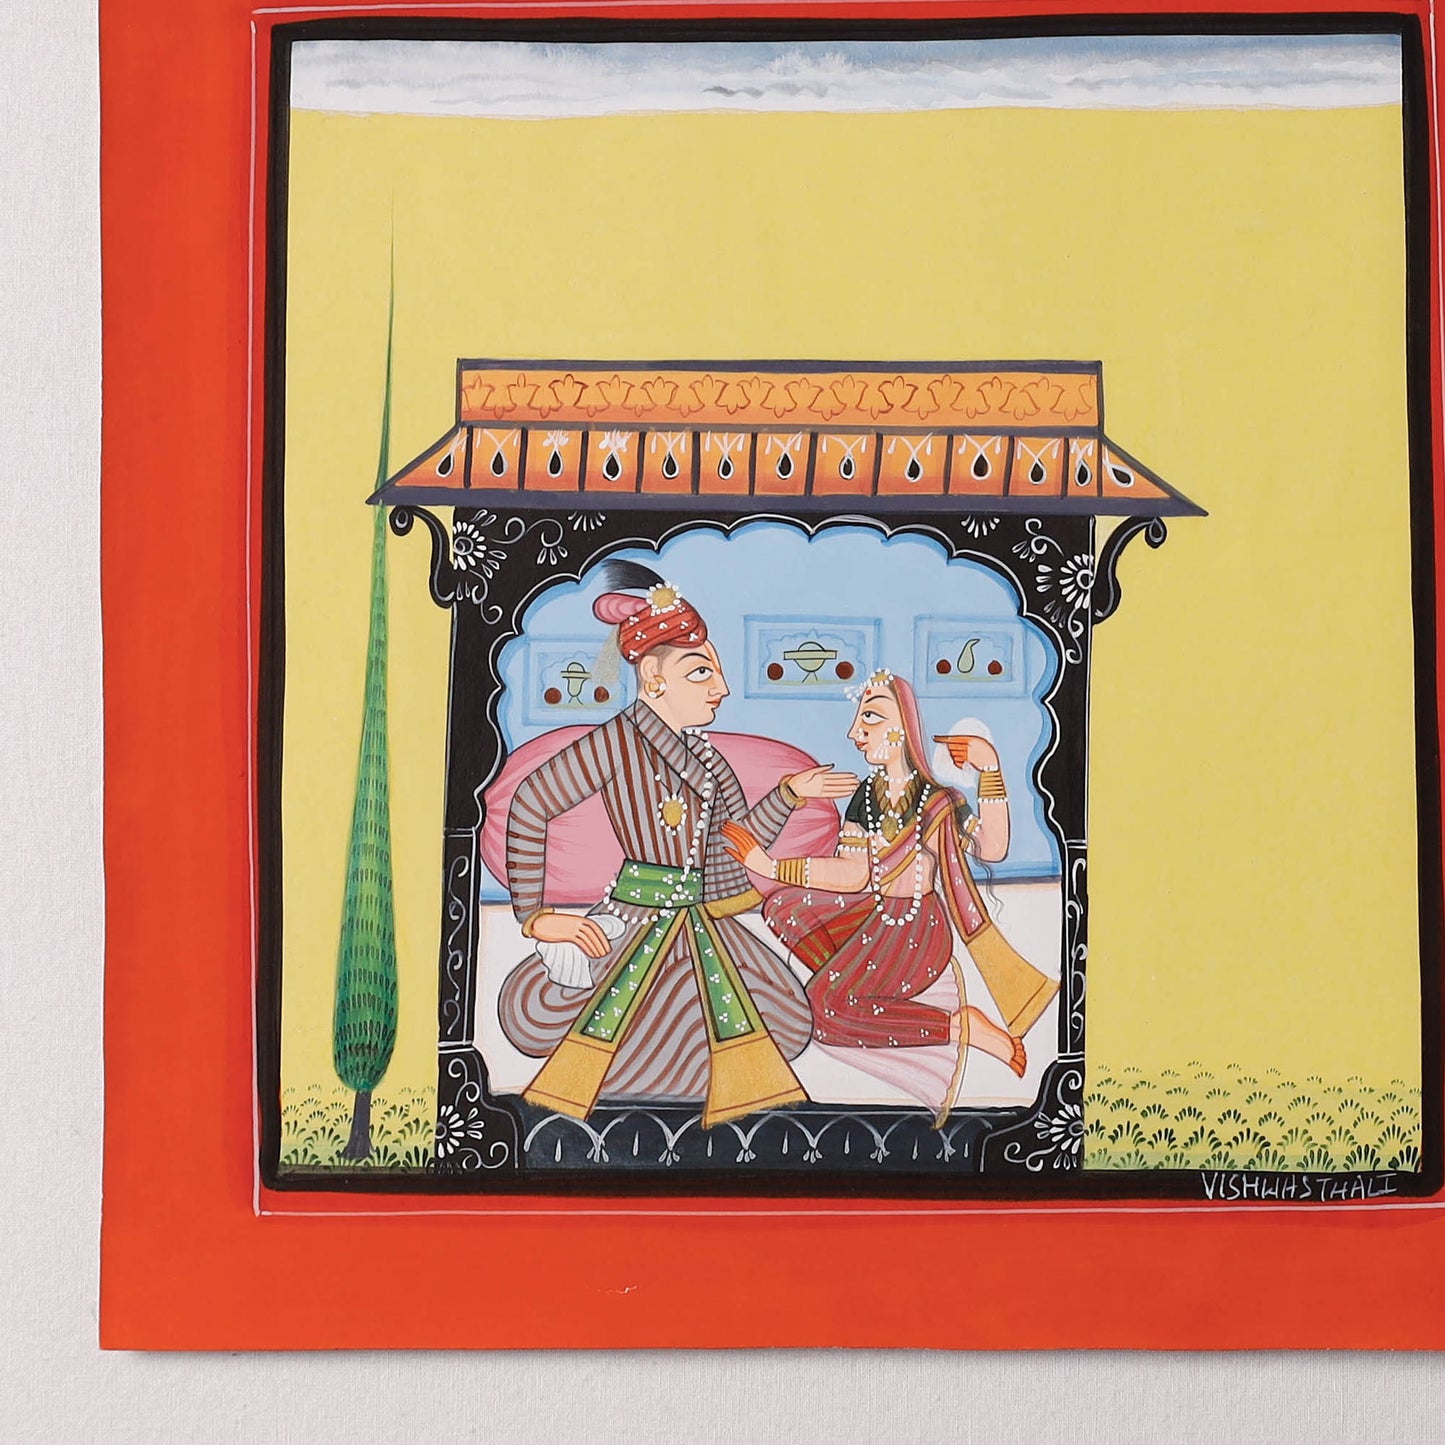 Traditional Basohli Painting by Vishwasthali (10 x 10 in)